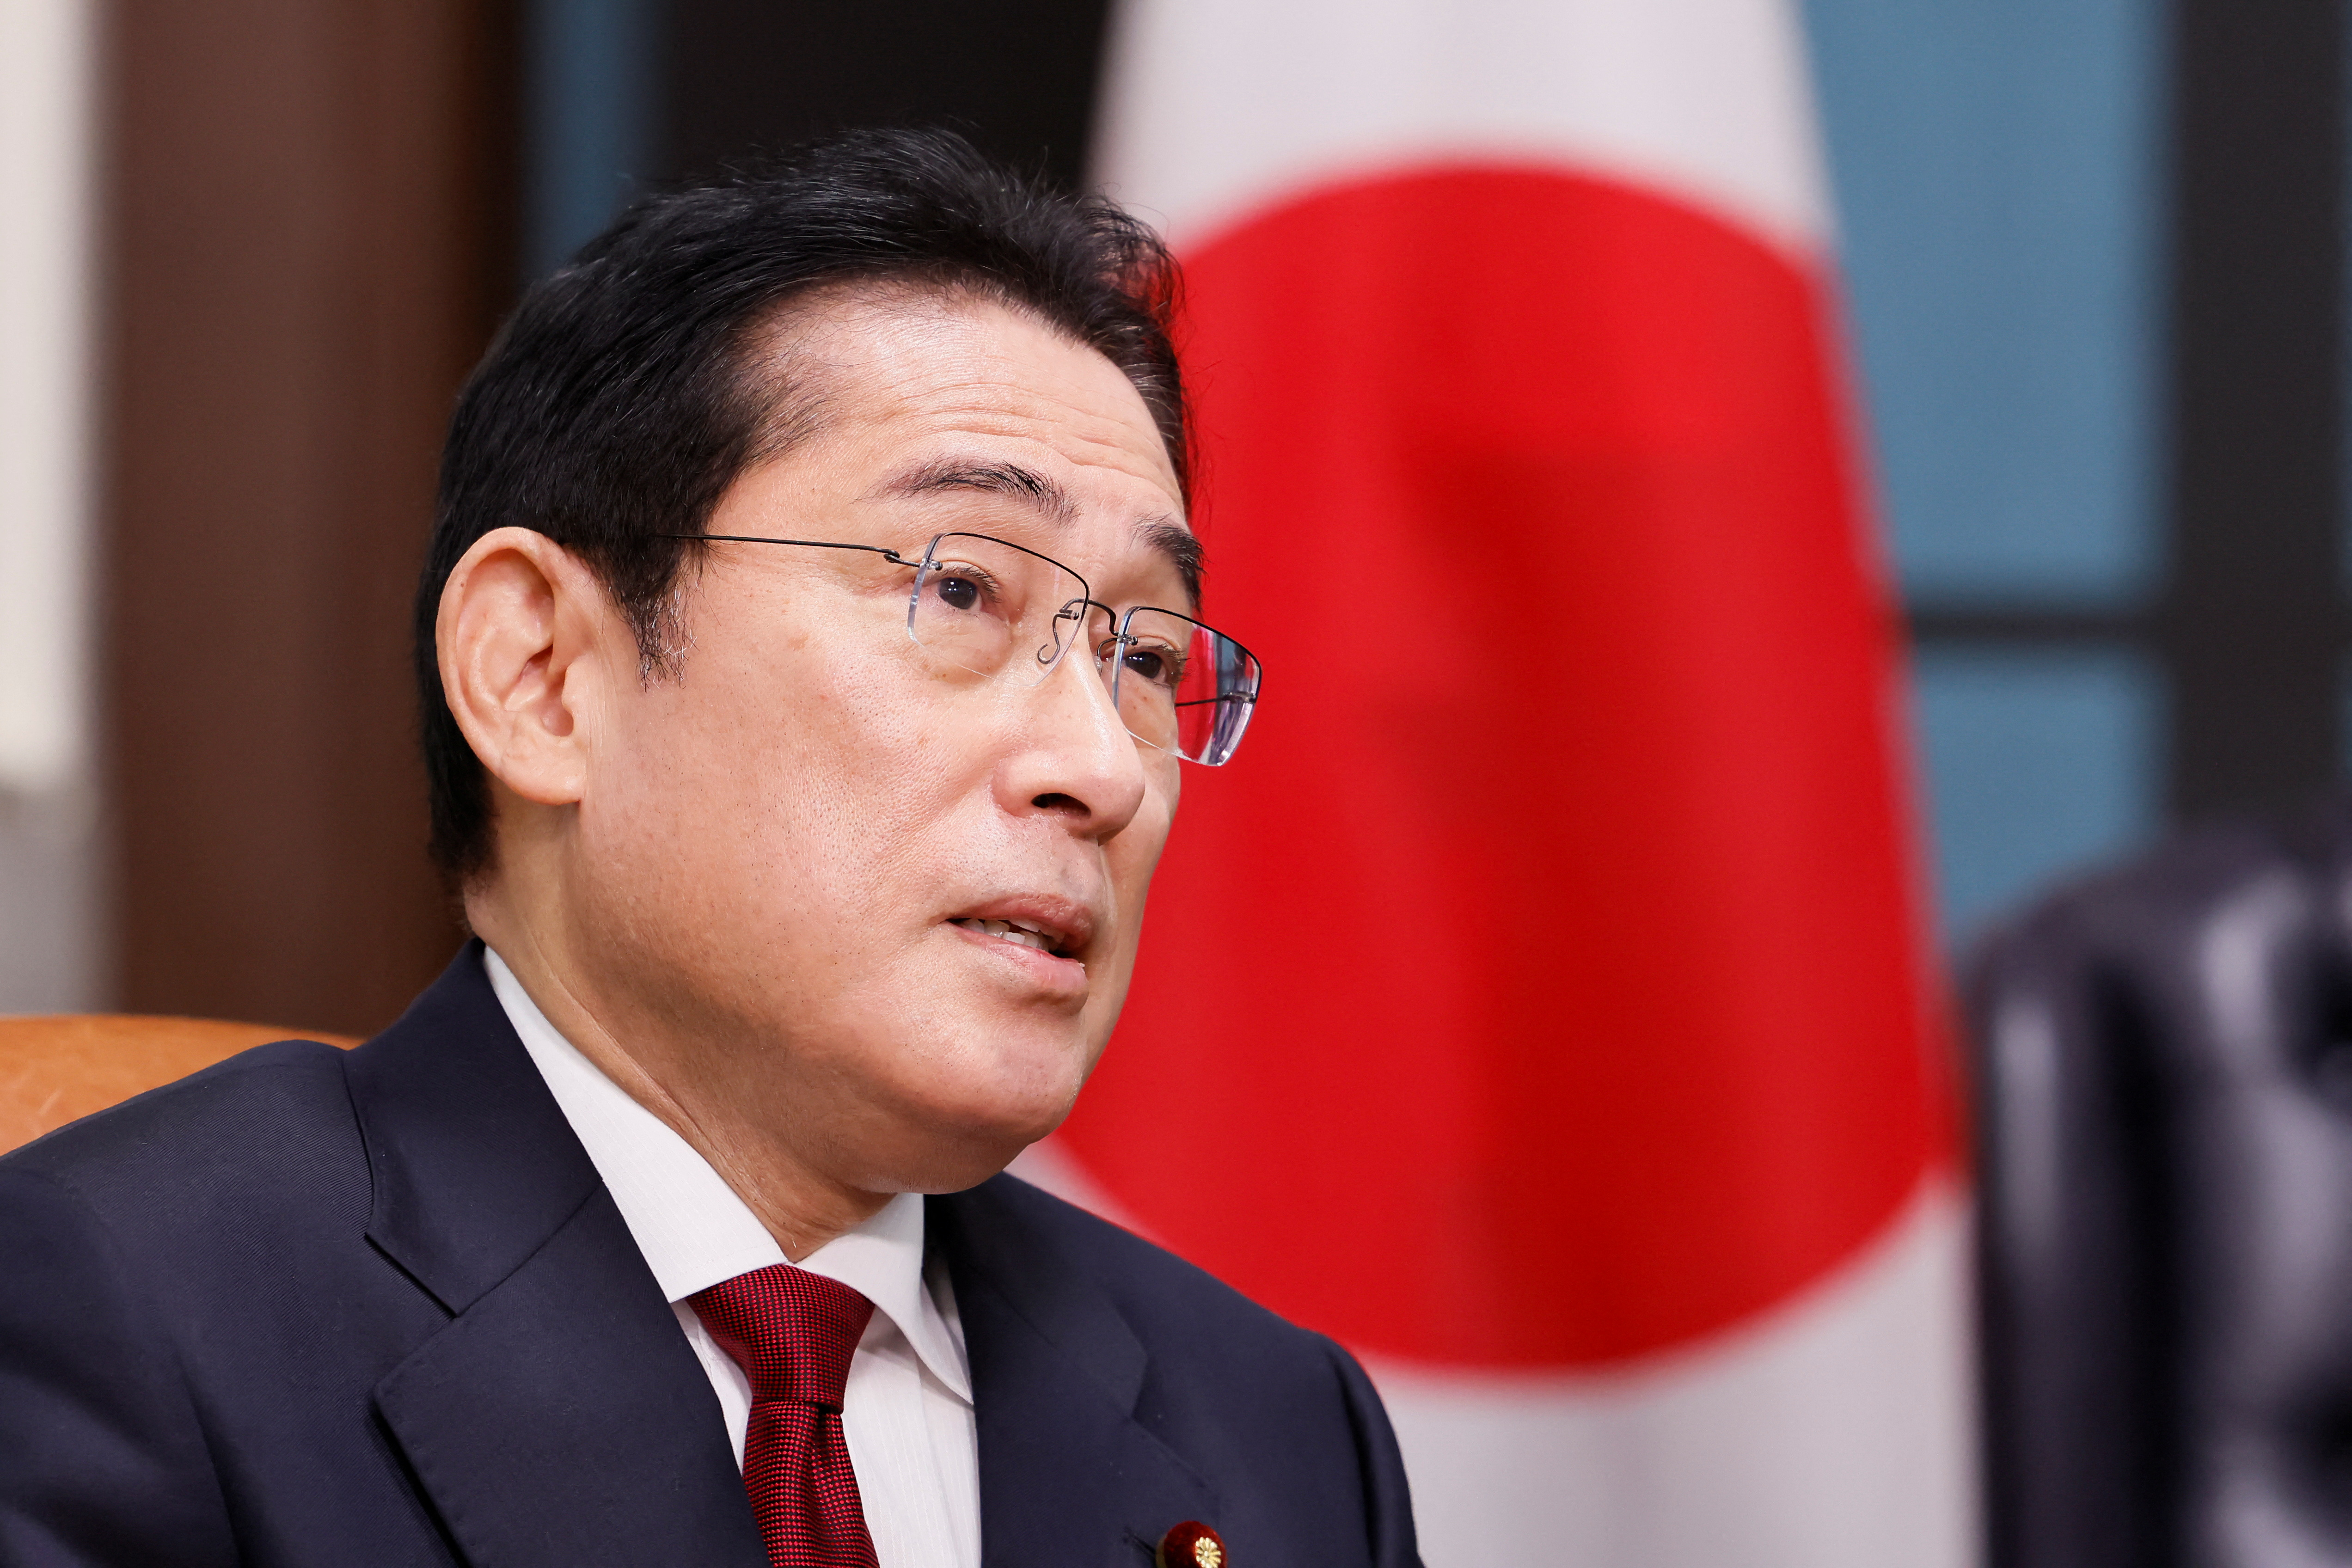 El primer ministro de Japón viaja a sorpresa a Ucrania para reunirse con Zelensky